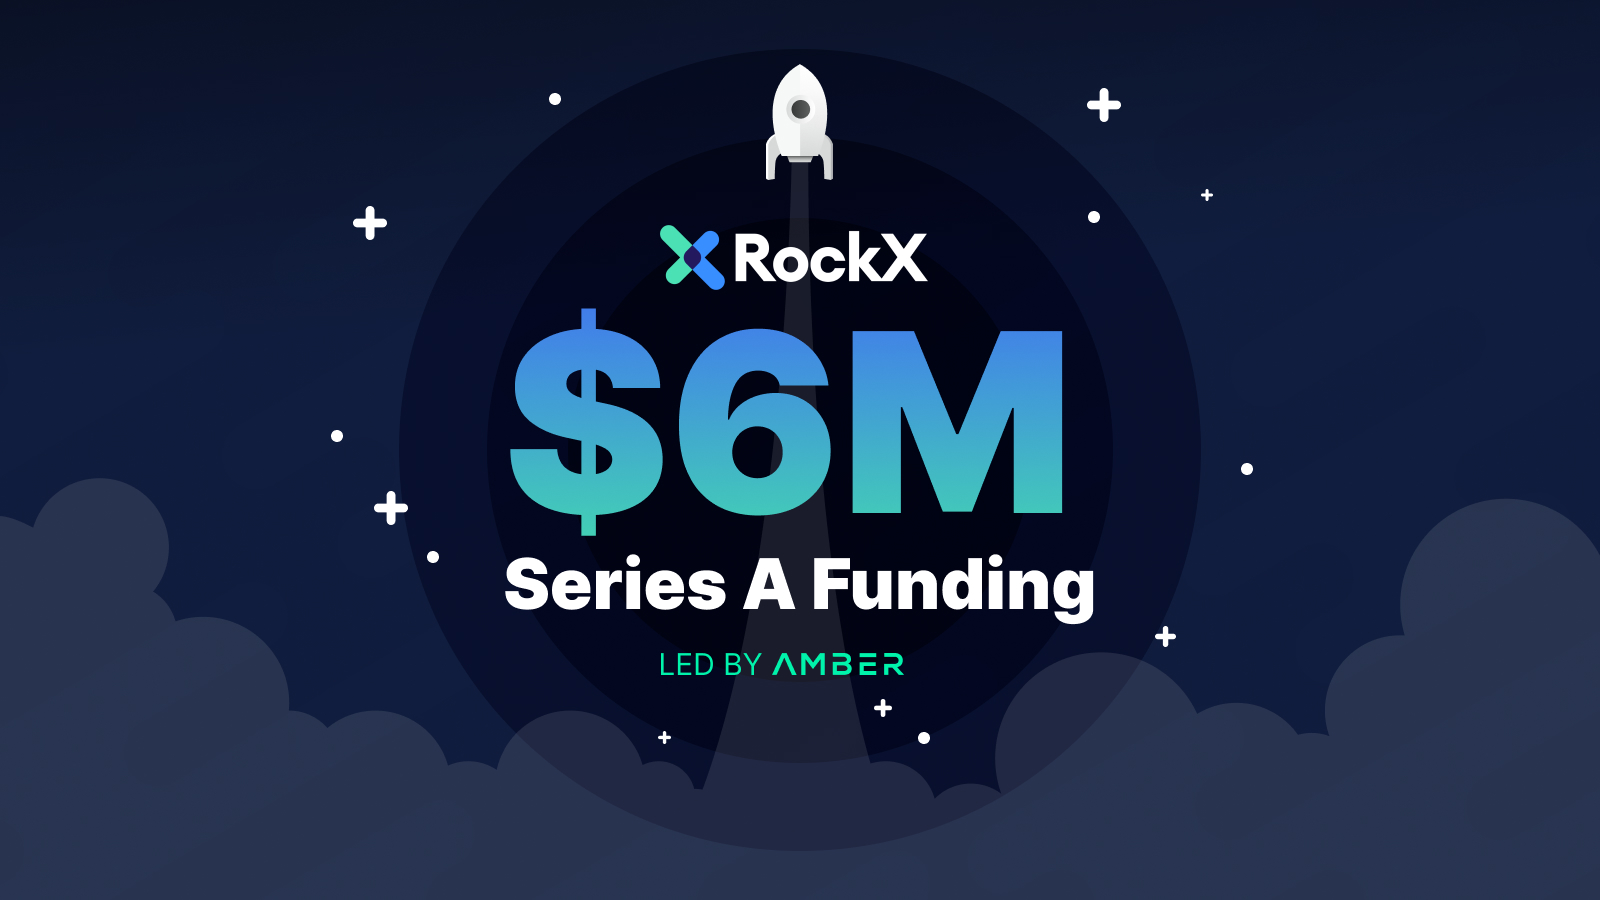 RockX Fundraising Announcement